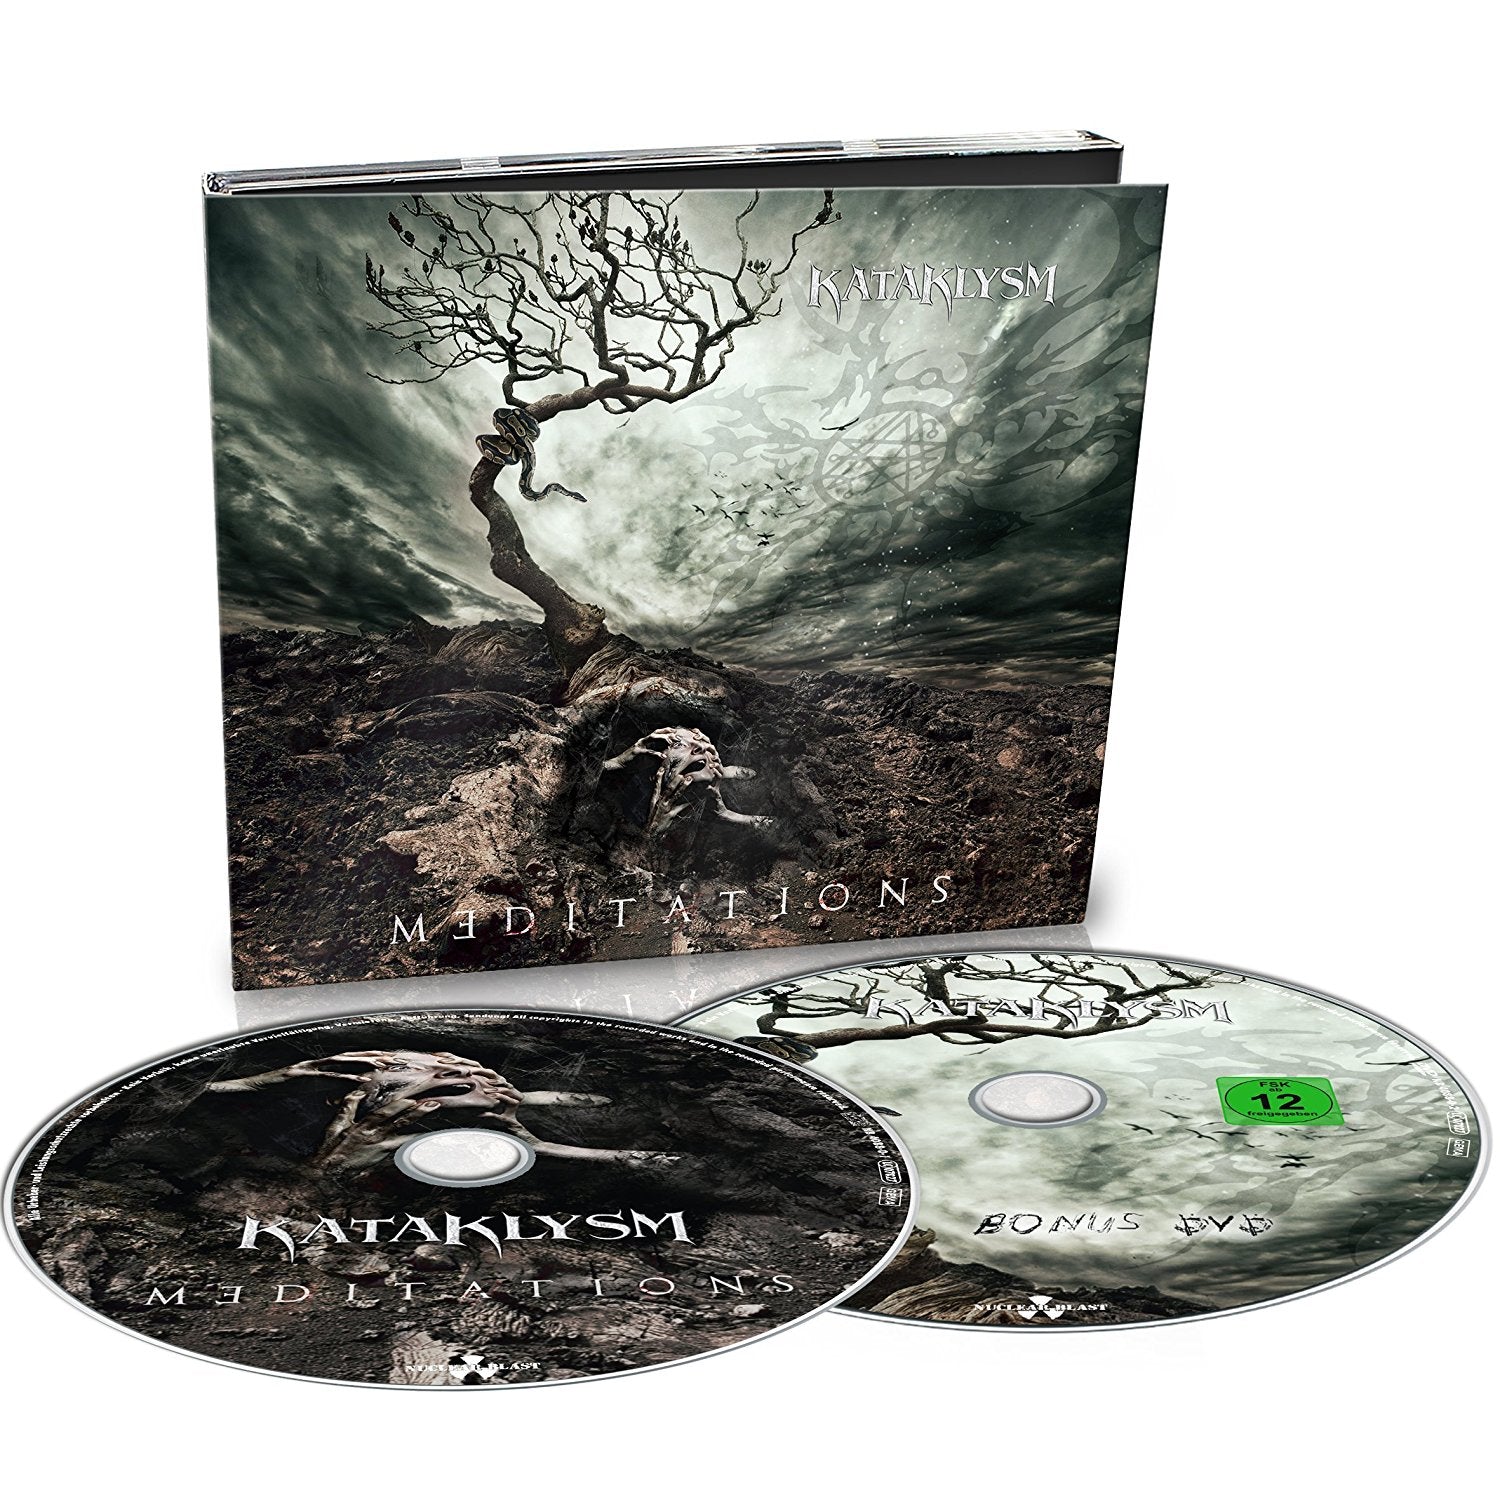 Kataklysm "Meditations" CD/DVD Digipak